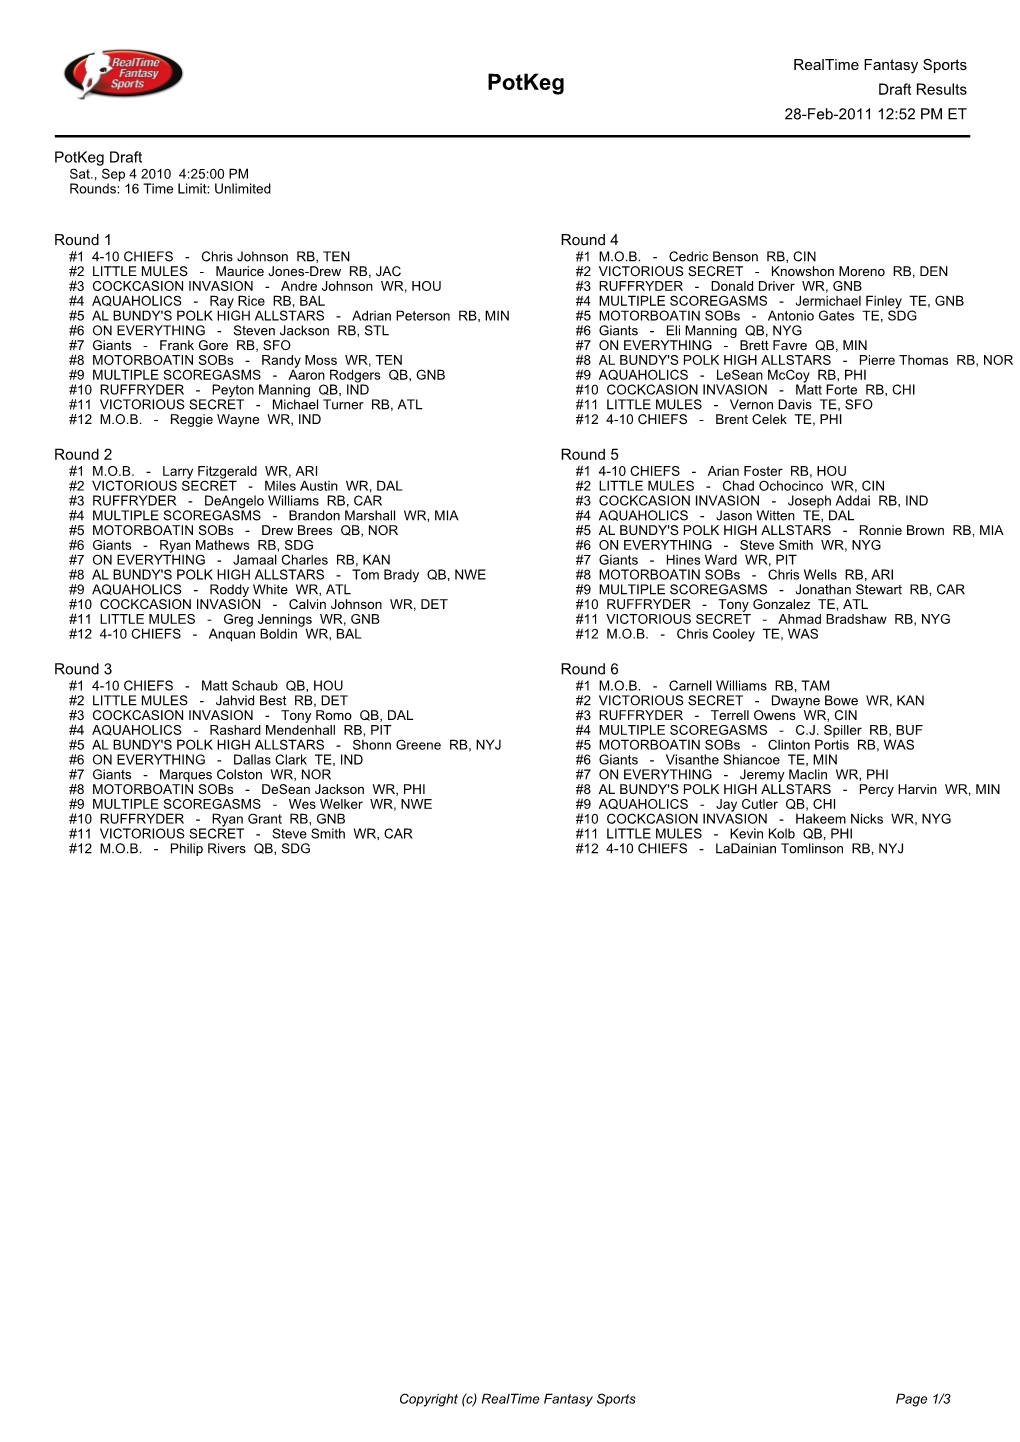 Potkeg Draft Results 28-Feb-2011 12:52 PM ET